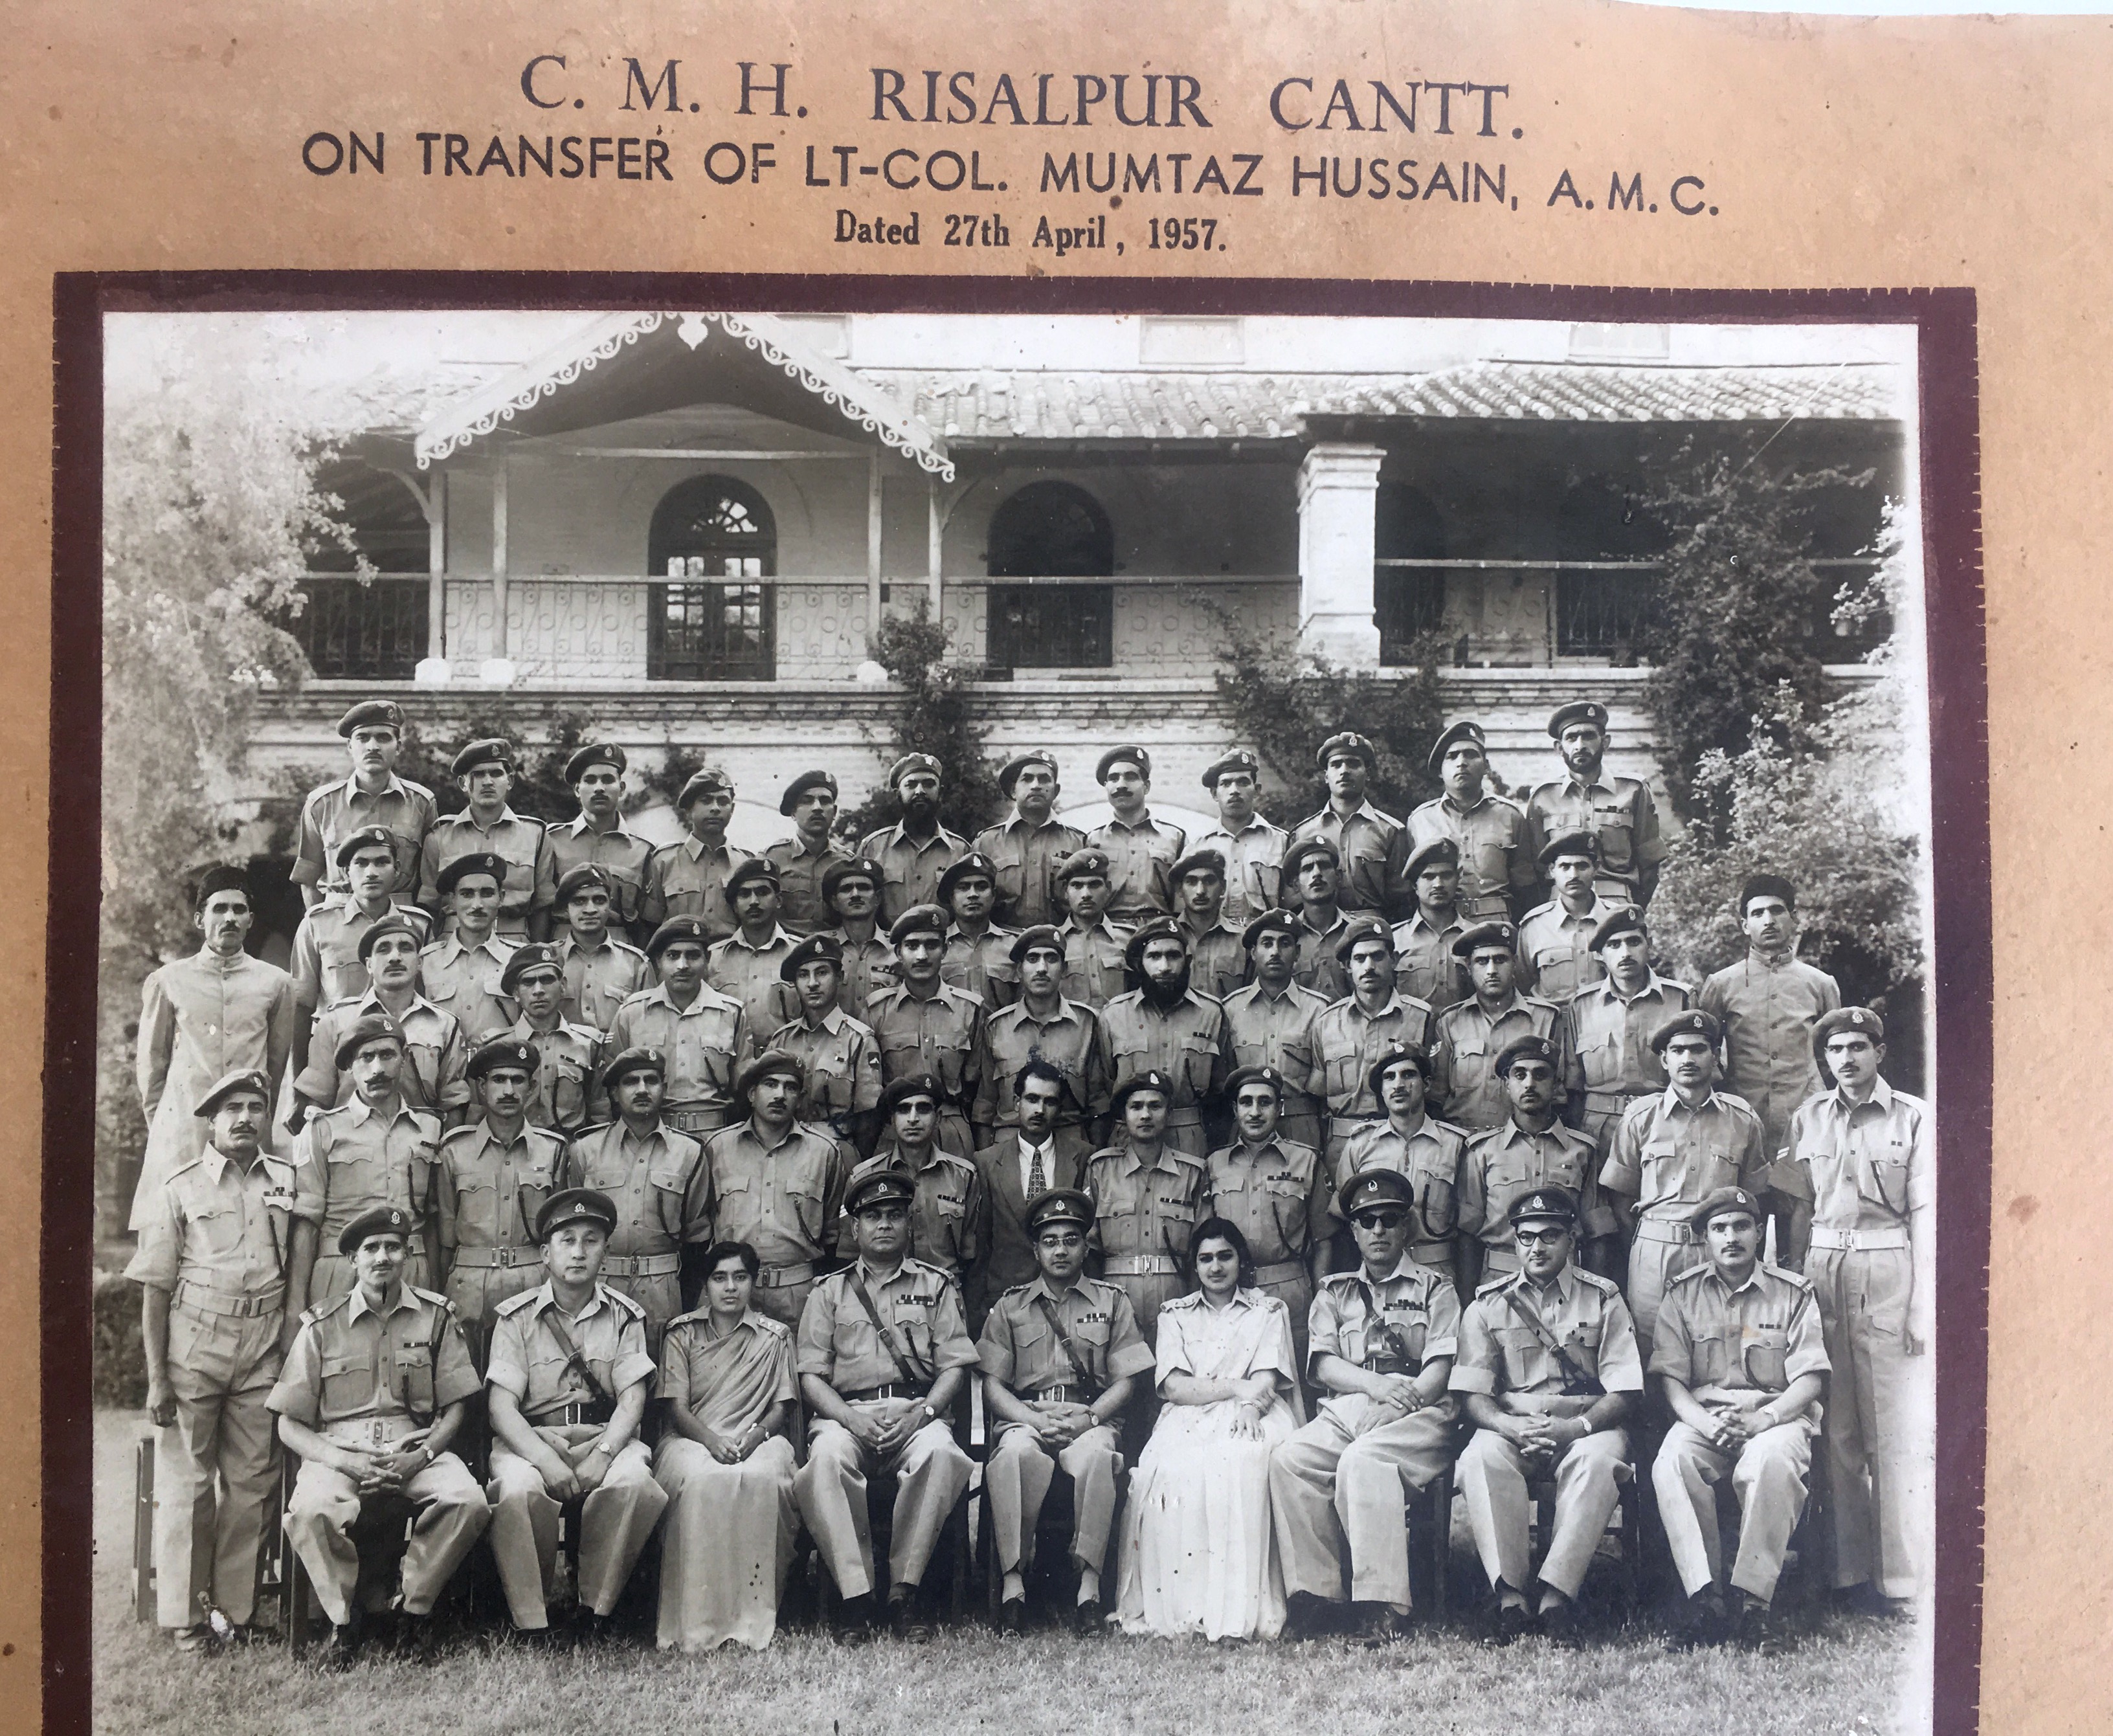 CMH Risalpur Cantt (27th April 1957)
